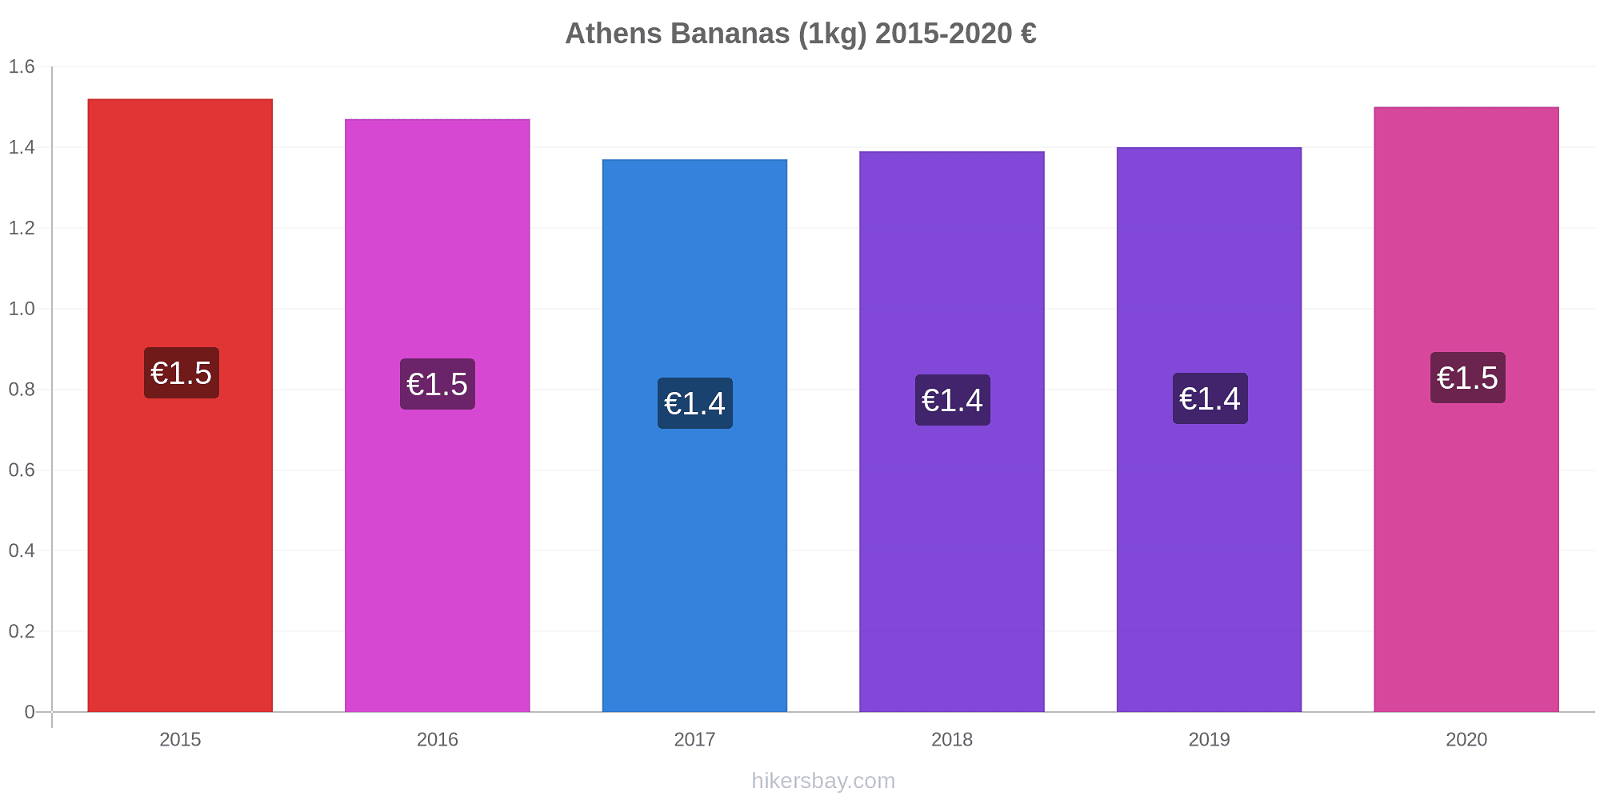 Athens price changes Bananas (1kg) hikersbay.com